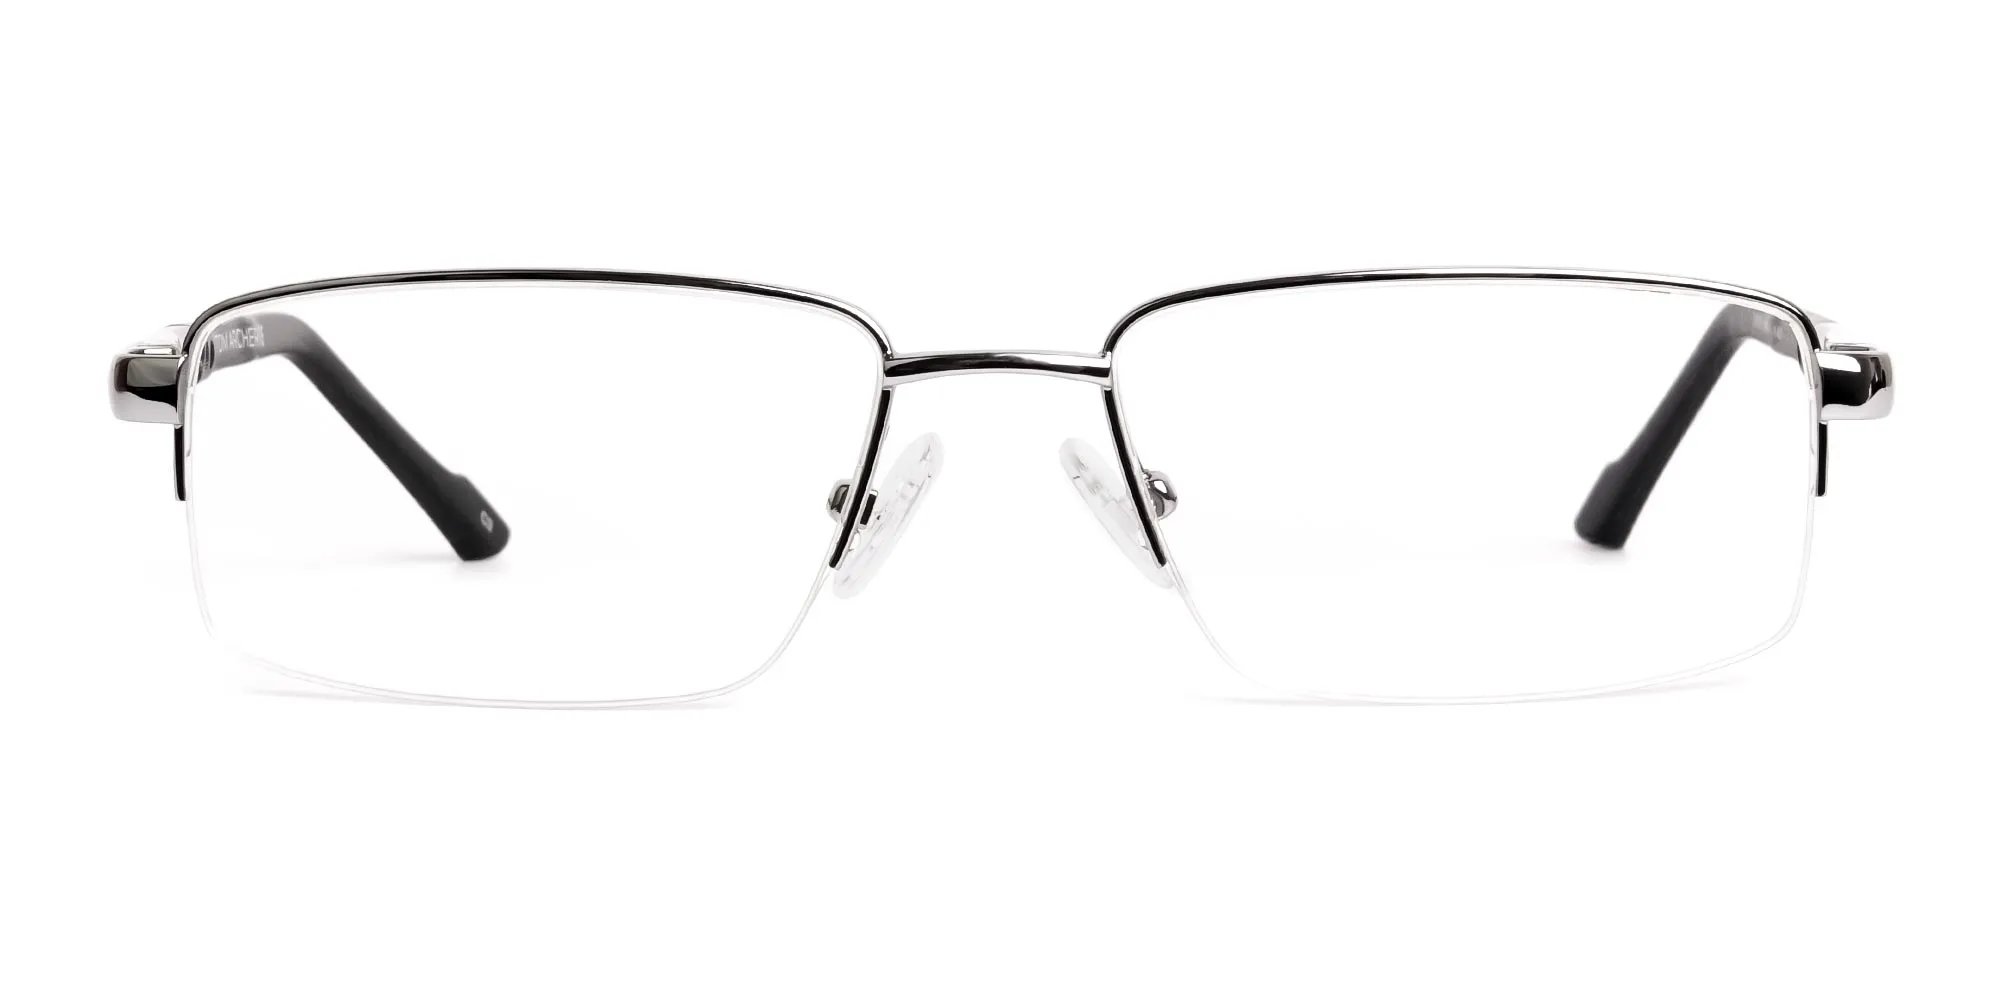 silver and black half rim rectangular glasses frames  -2